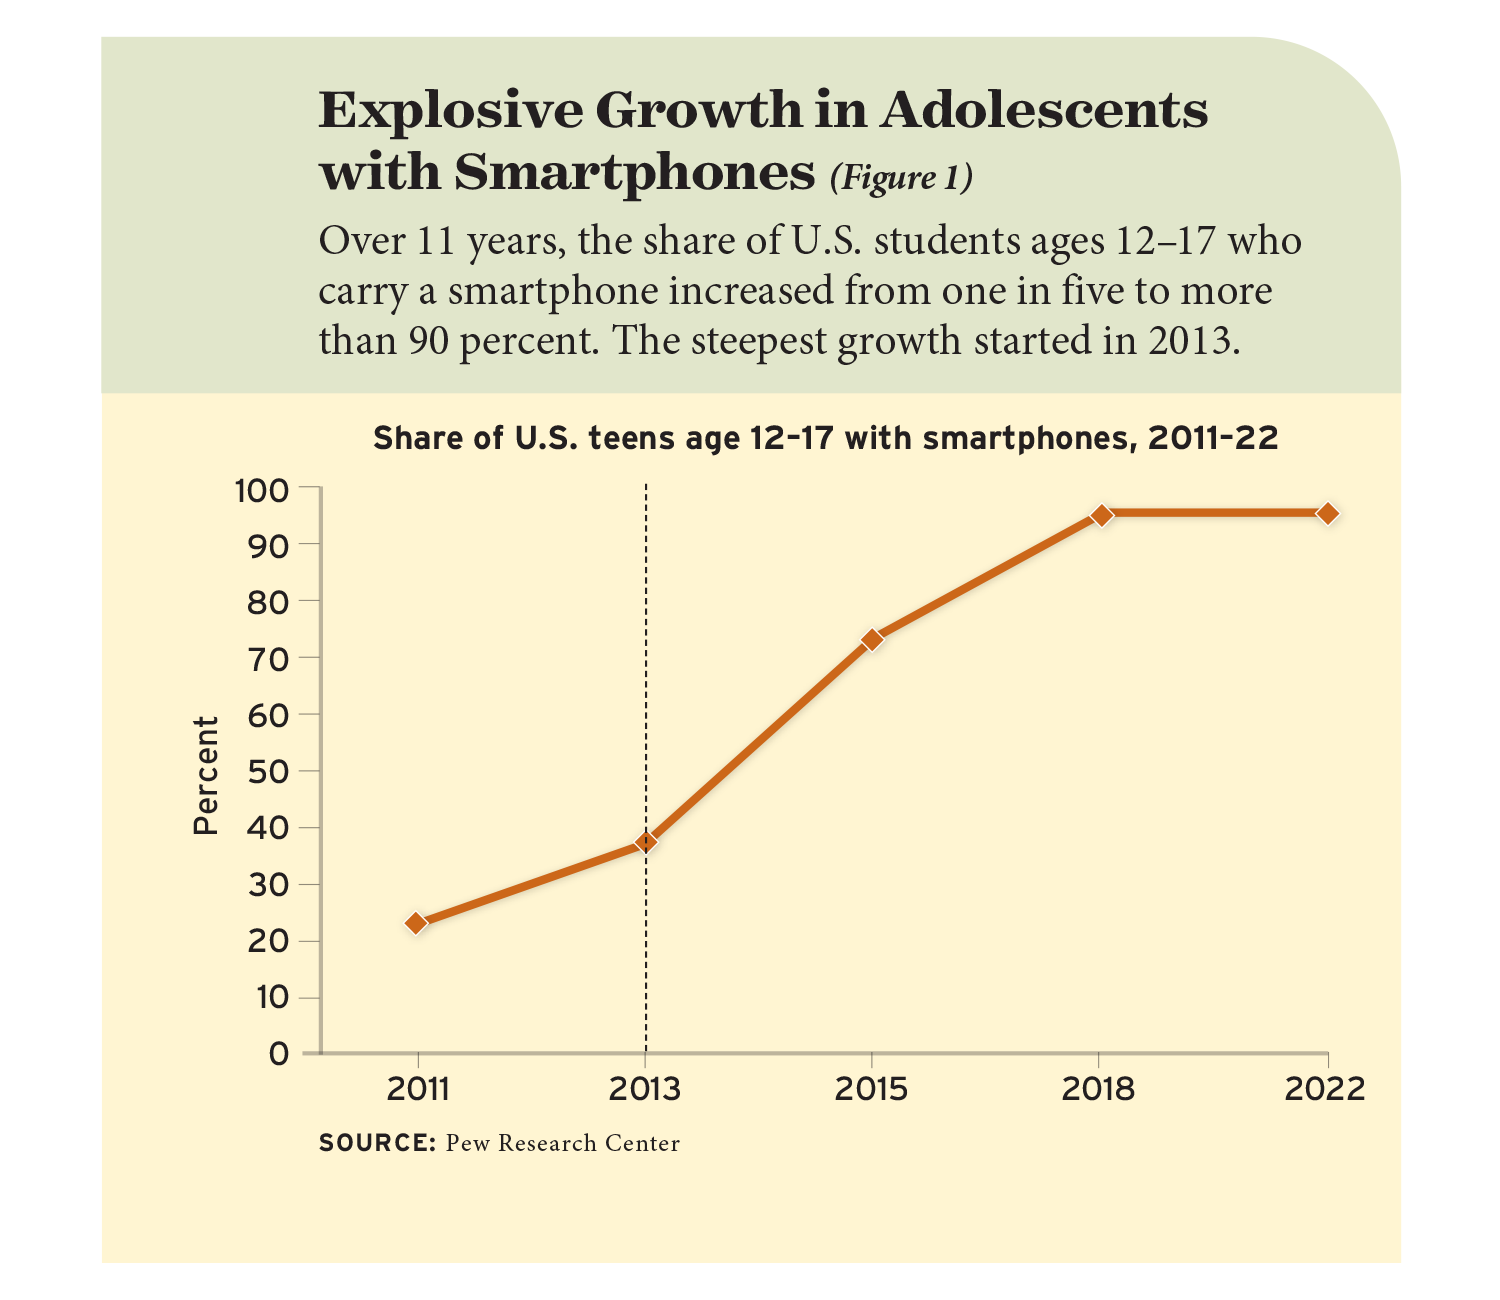 Figure 1: Explosive Growth in Adolescents with Smartphones